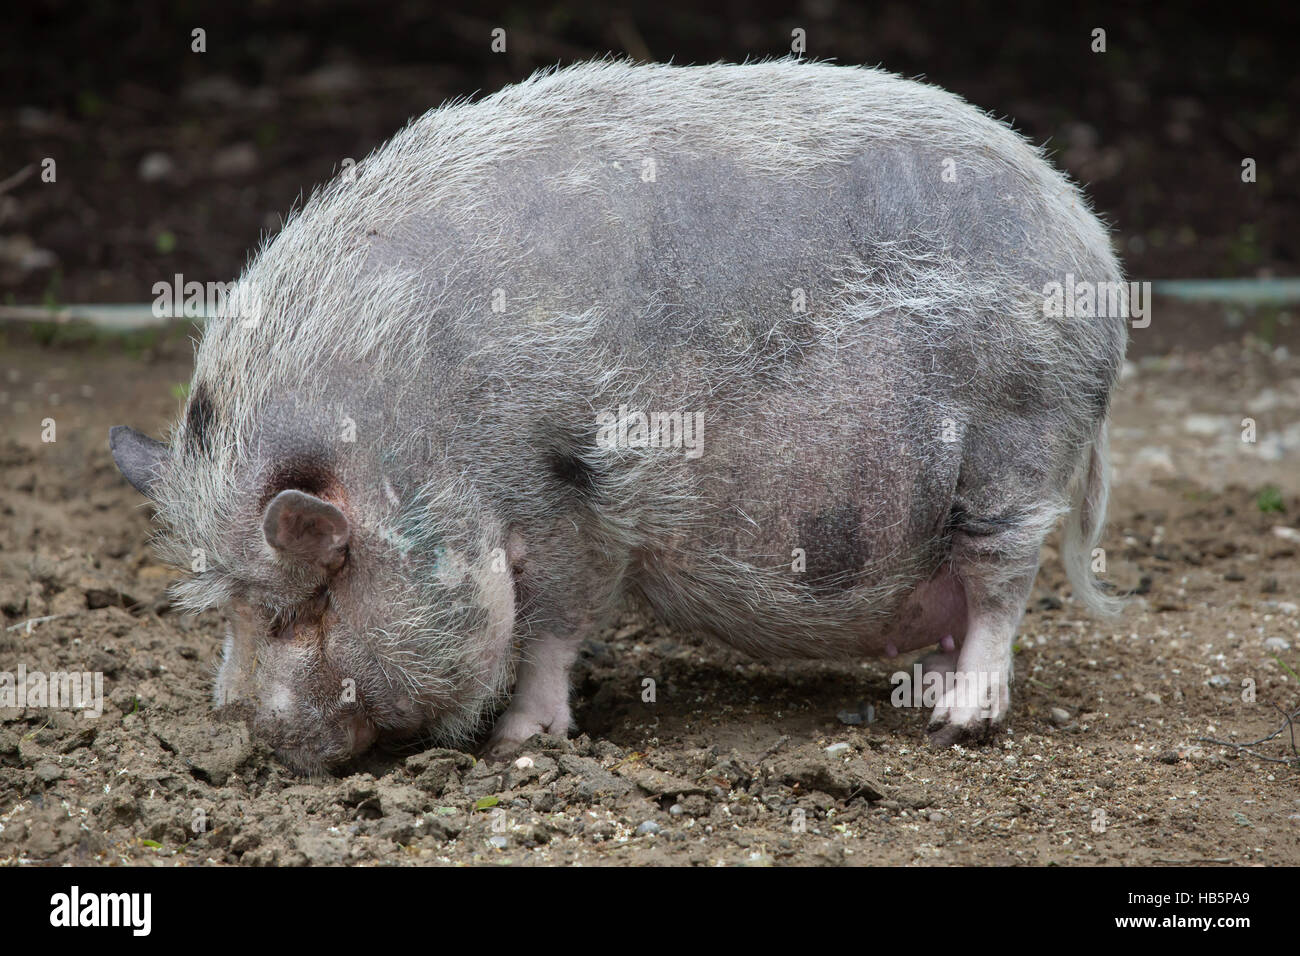 Pot-bellied pig (Sus scrofa domesticus). Domestic animal. Stock Photo